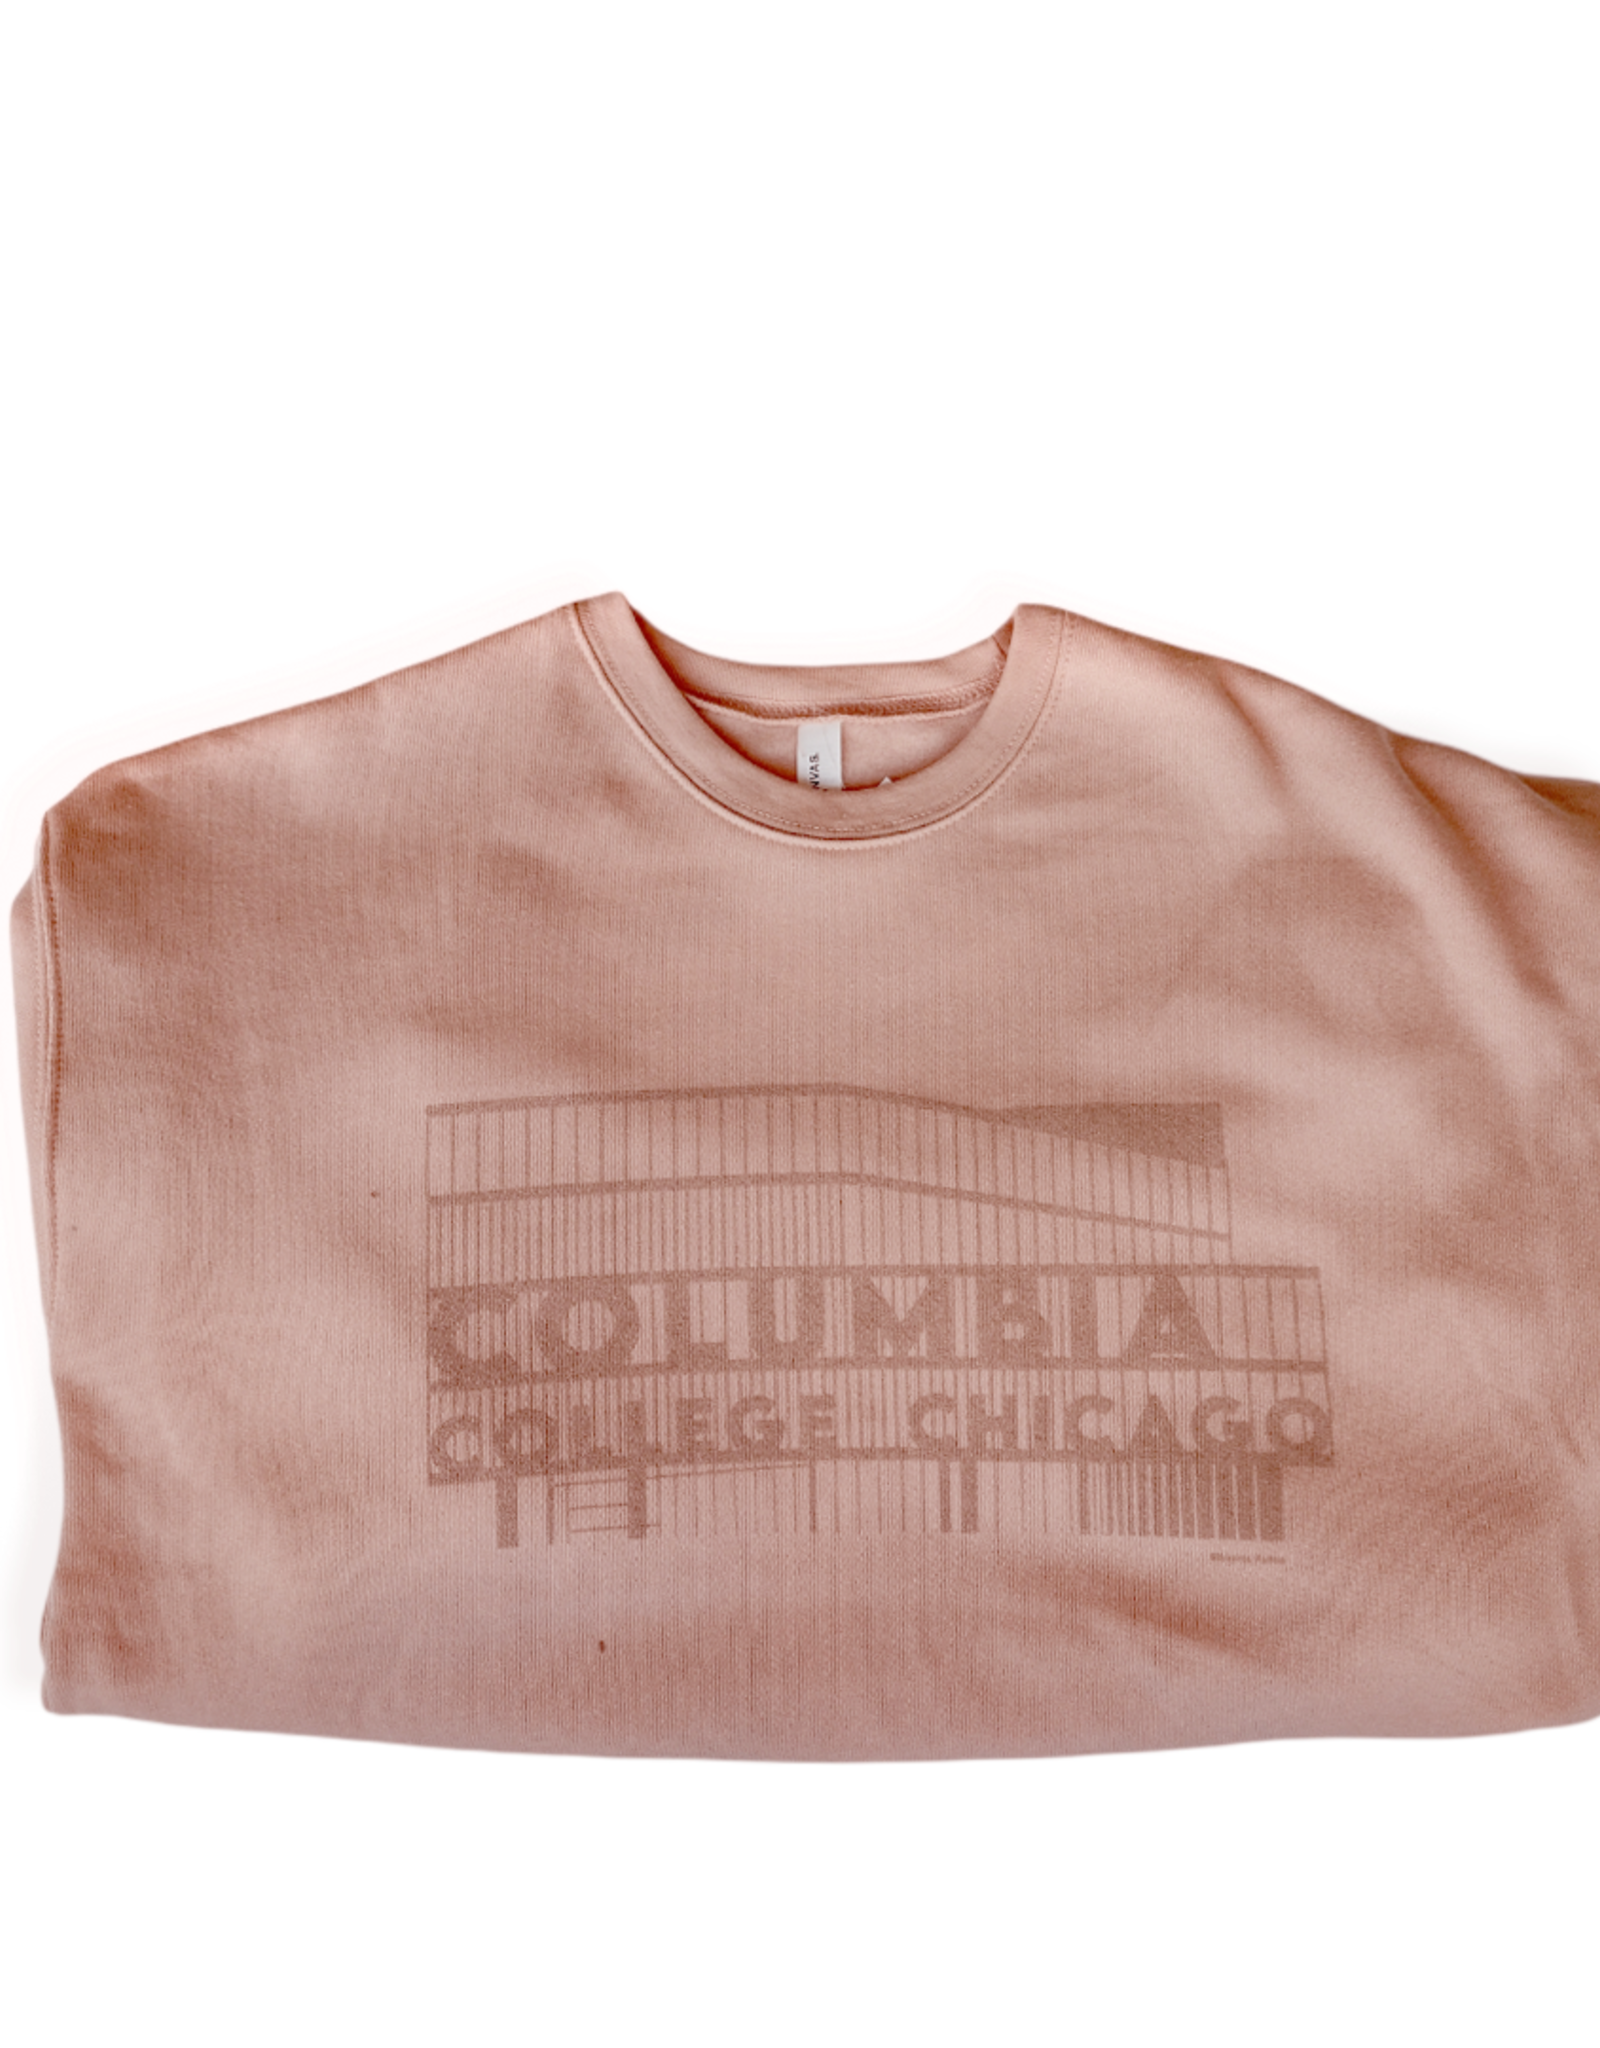 Buy Columbia, By Columbia New: Peach Columbia Sweatshirt